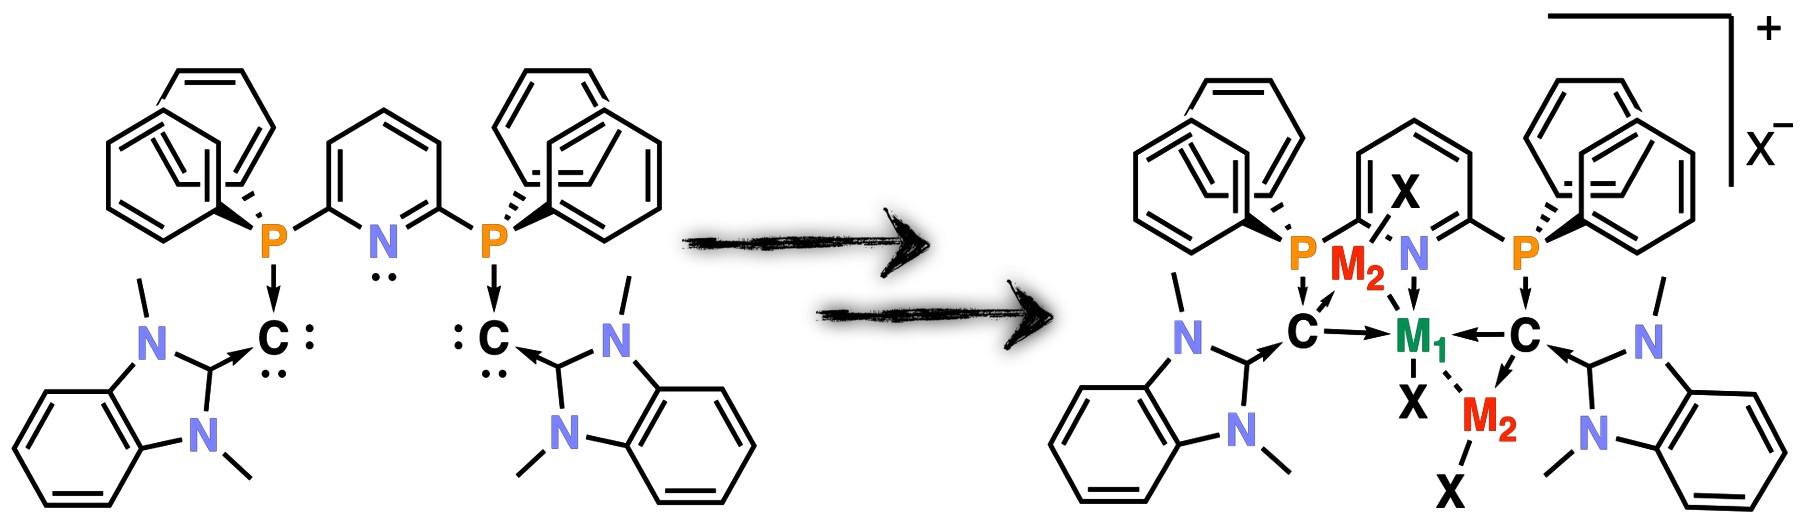 SA Bis-(carbone) Pincer Ligand and Its Coordinative Behavior toward Multi-Metallic Configurations
